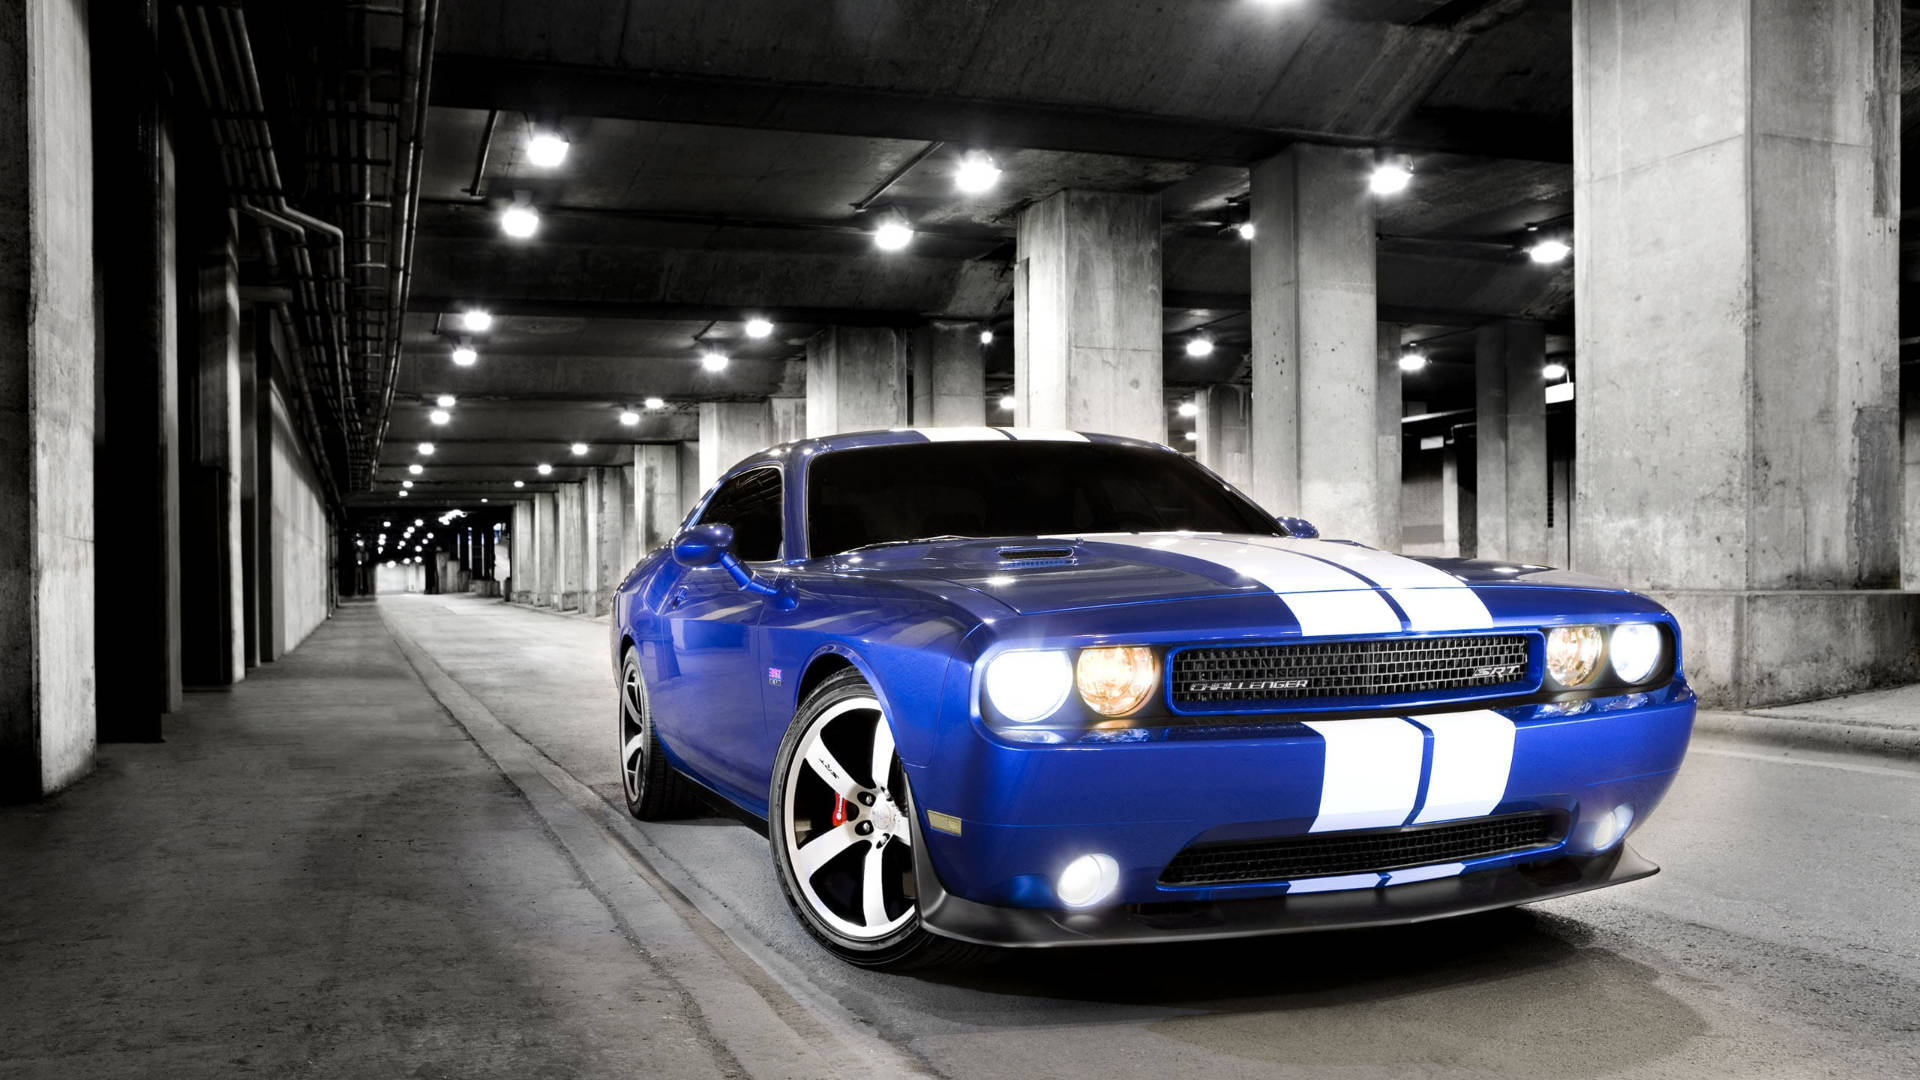 Caption: Stunning Blue Dodge Challenger Parked Majestically Wallpaper